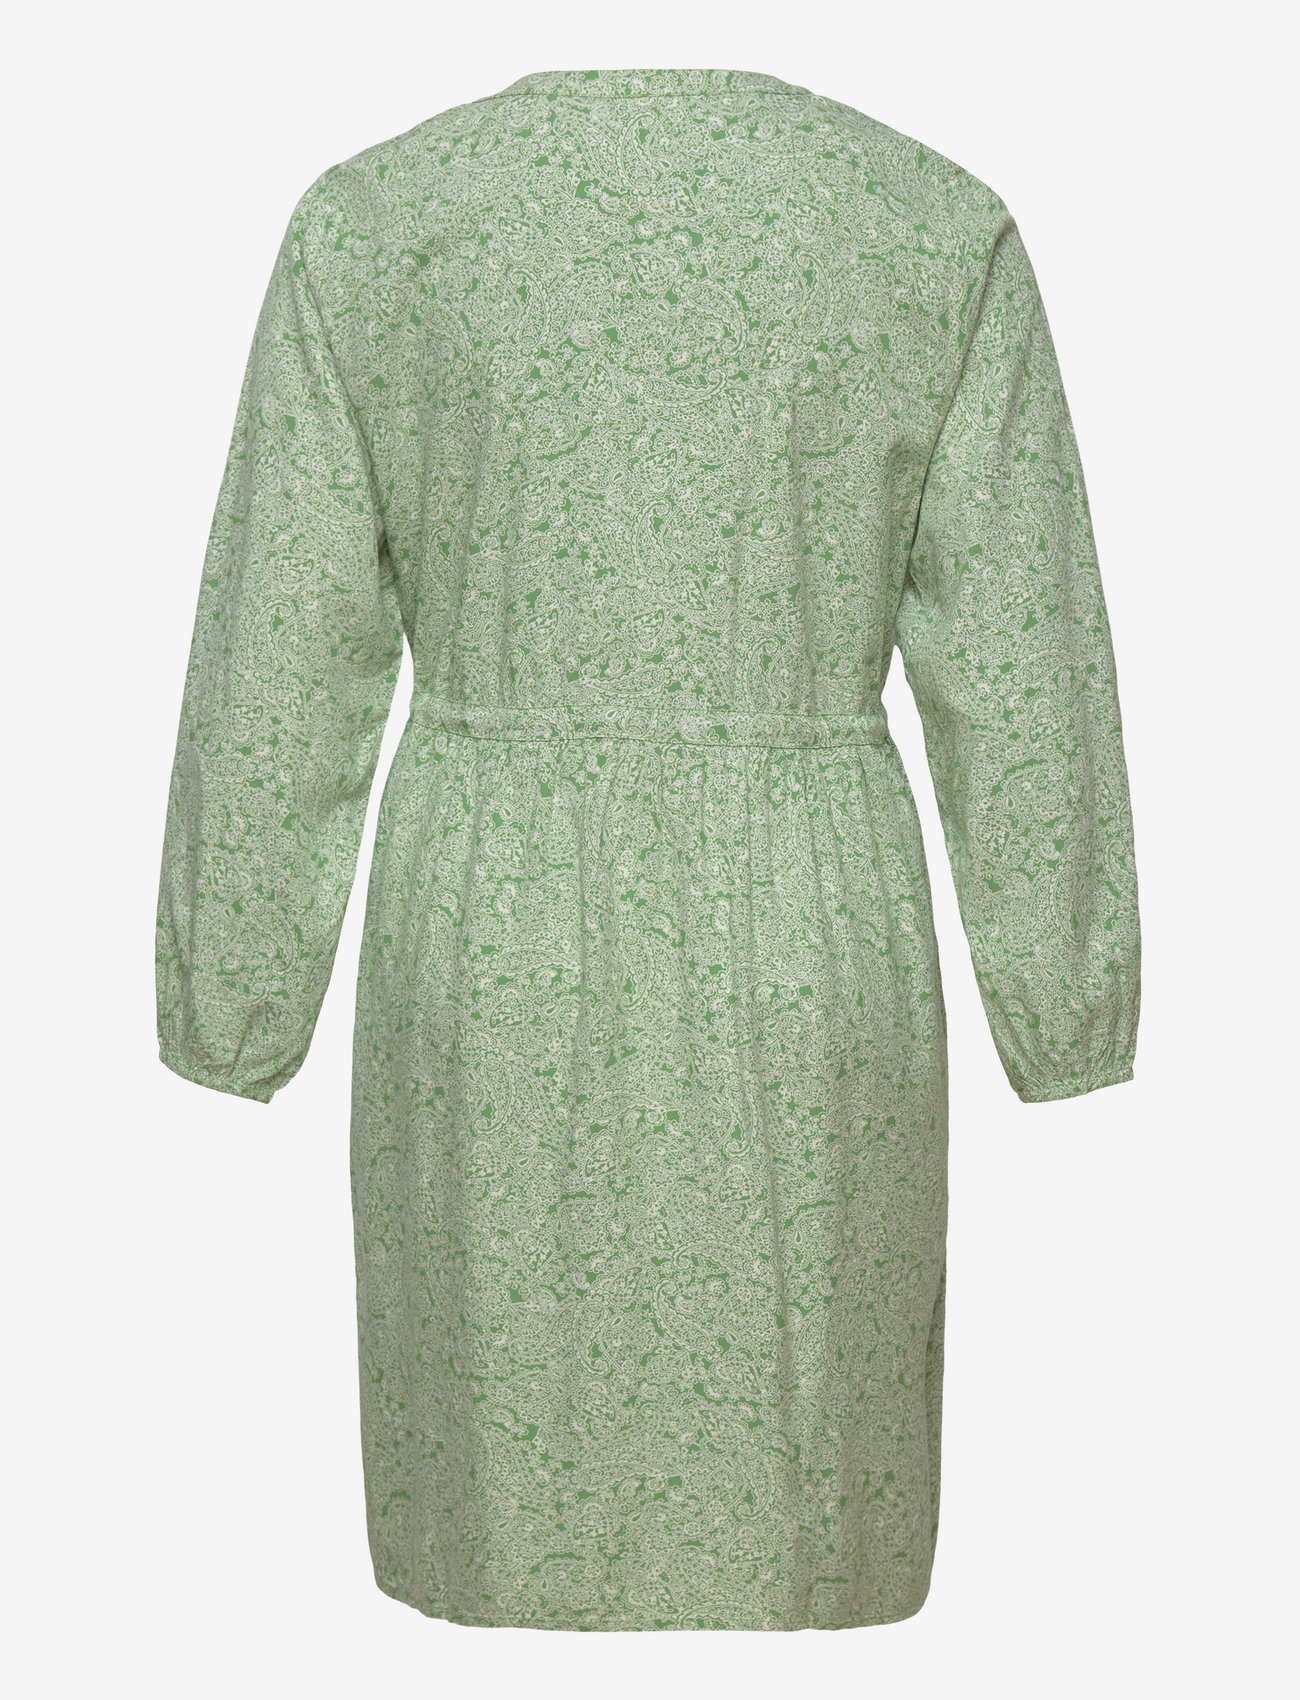 Cream - CRVimma Short Dress - Zally Fit - minikleidid - flourite green paisley - 1